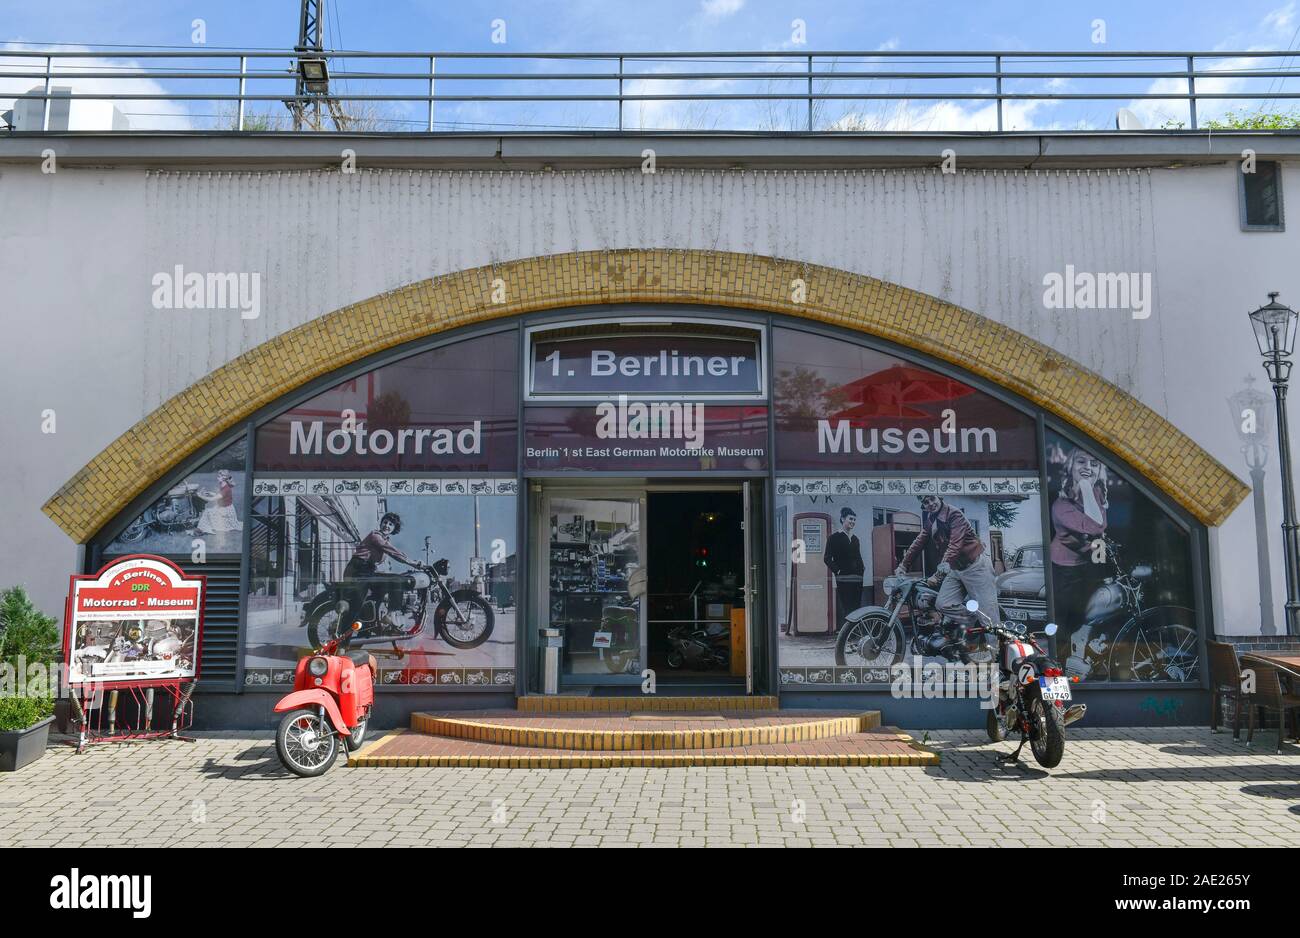 Berliner DDR-Motorrad-Museum, Rochstraße, Mitte, Berlin, Deutschland  Stockfotografie - Alamy